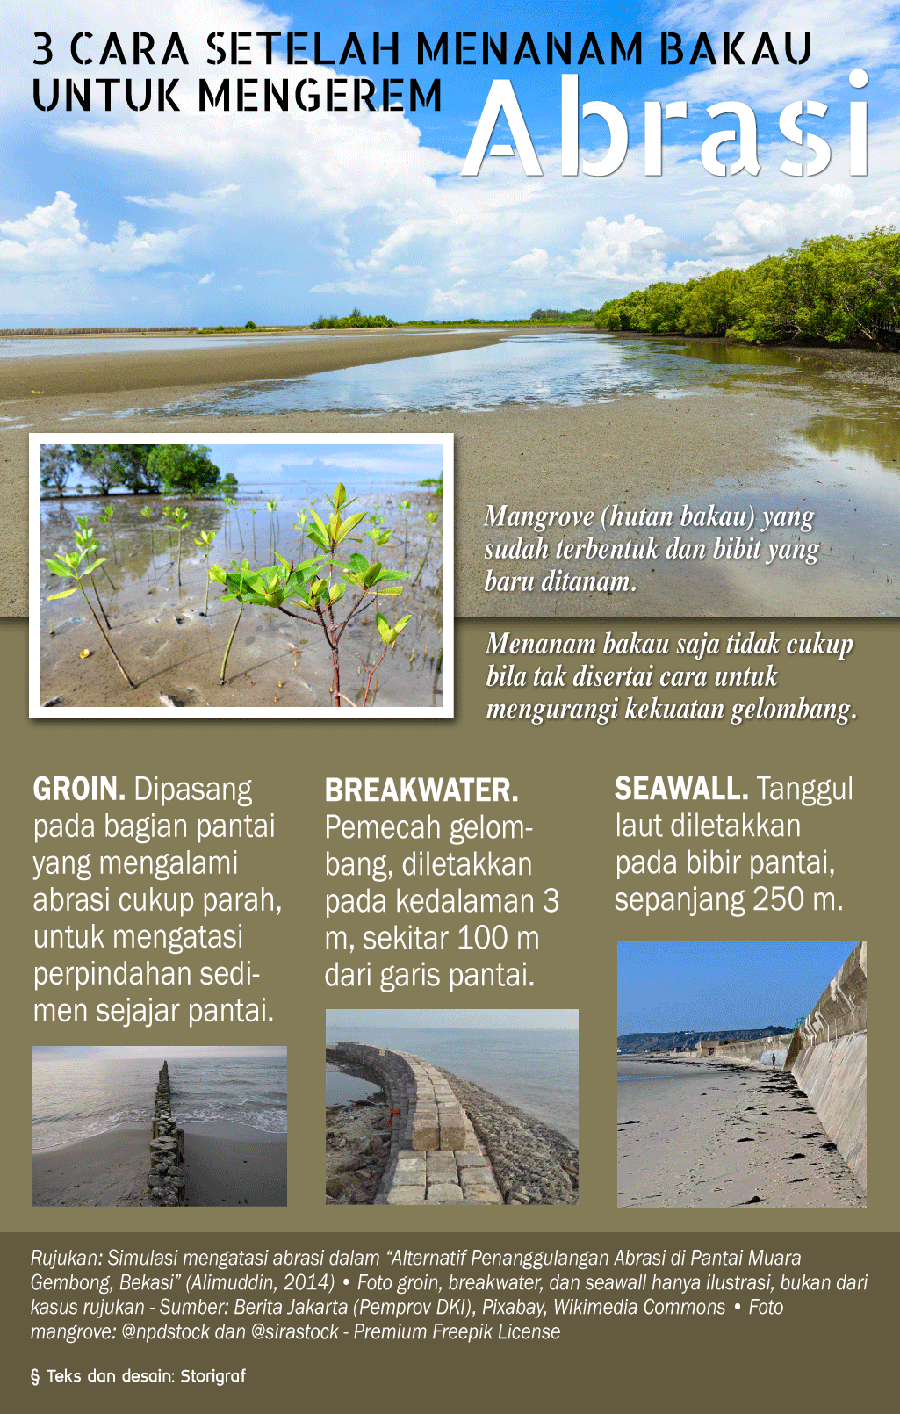 Manfaat pohon bakau di tepi pantai